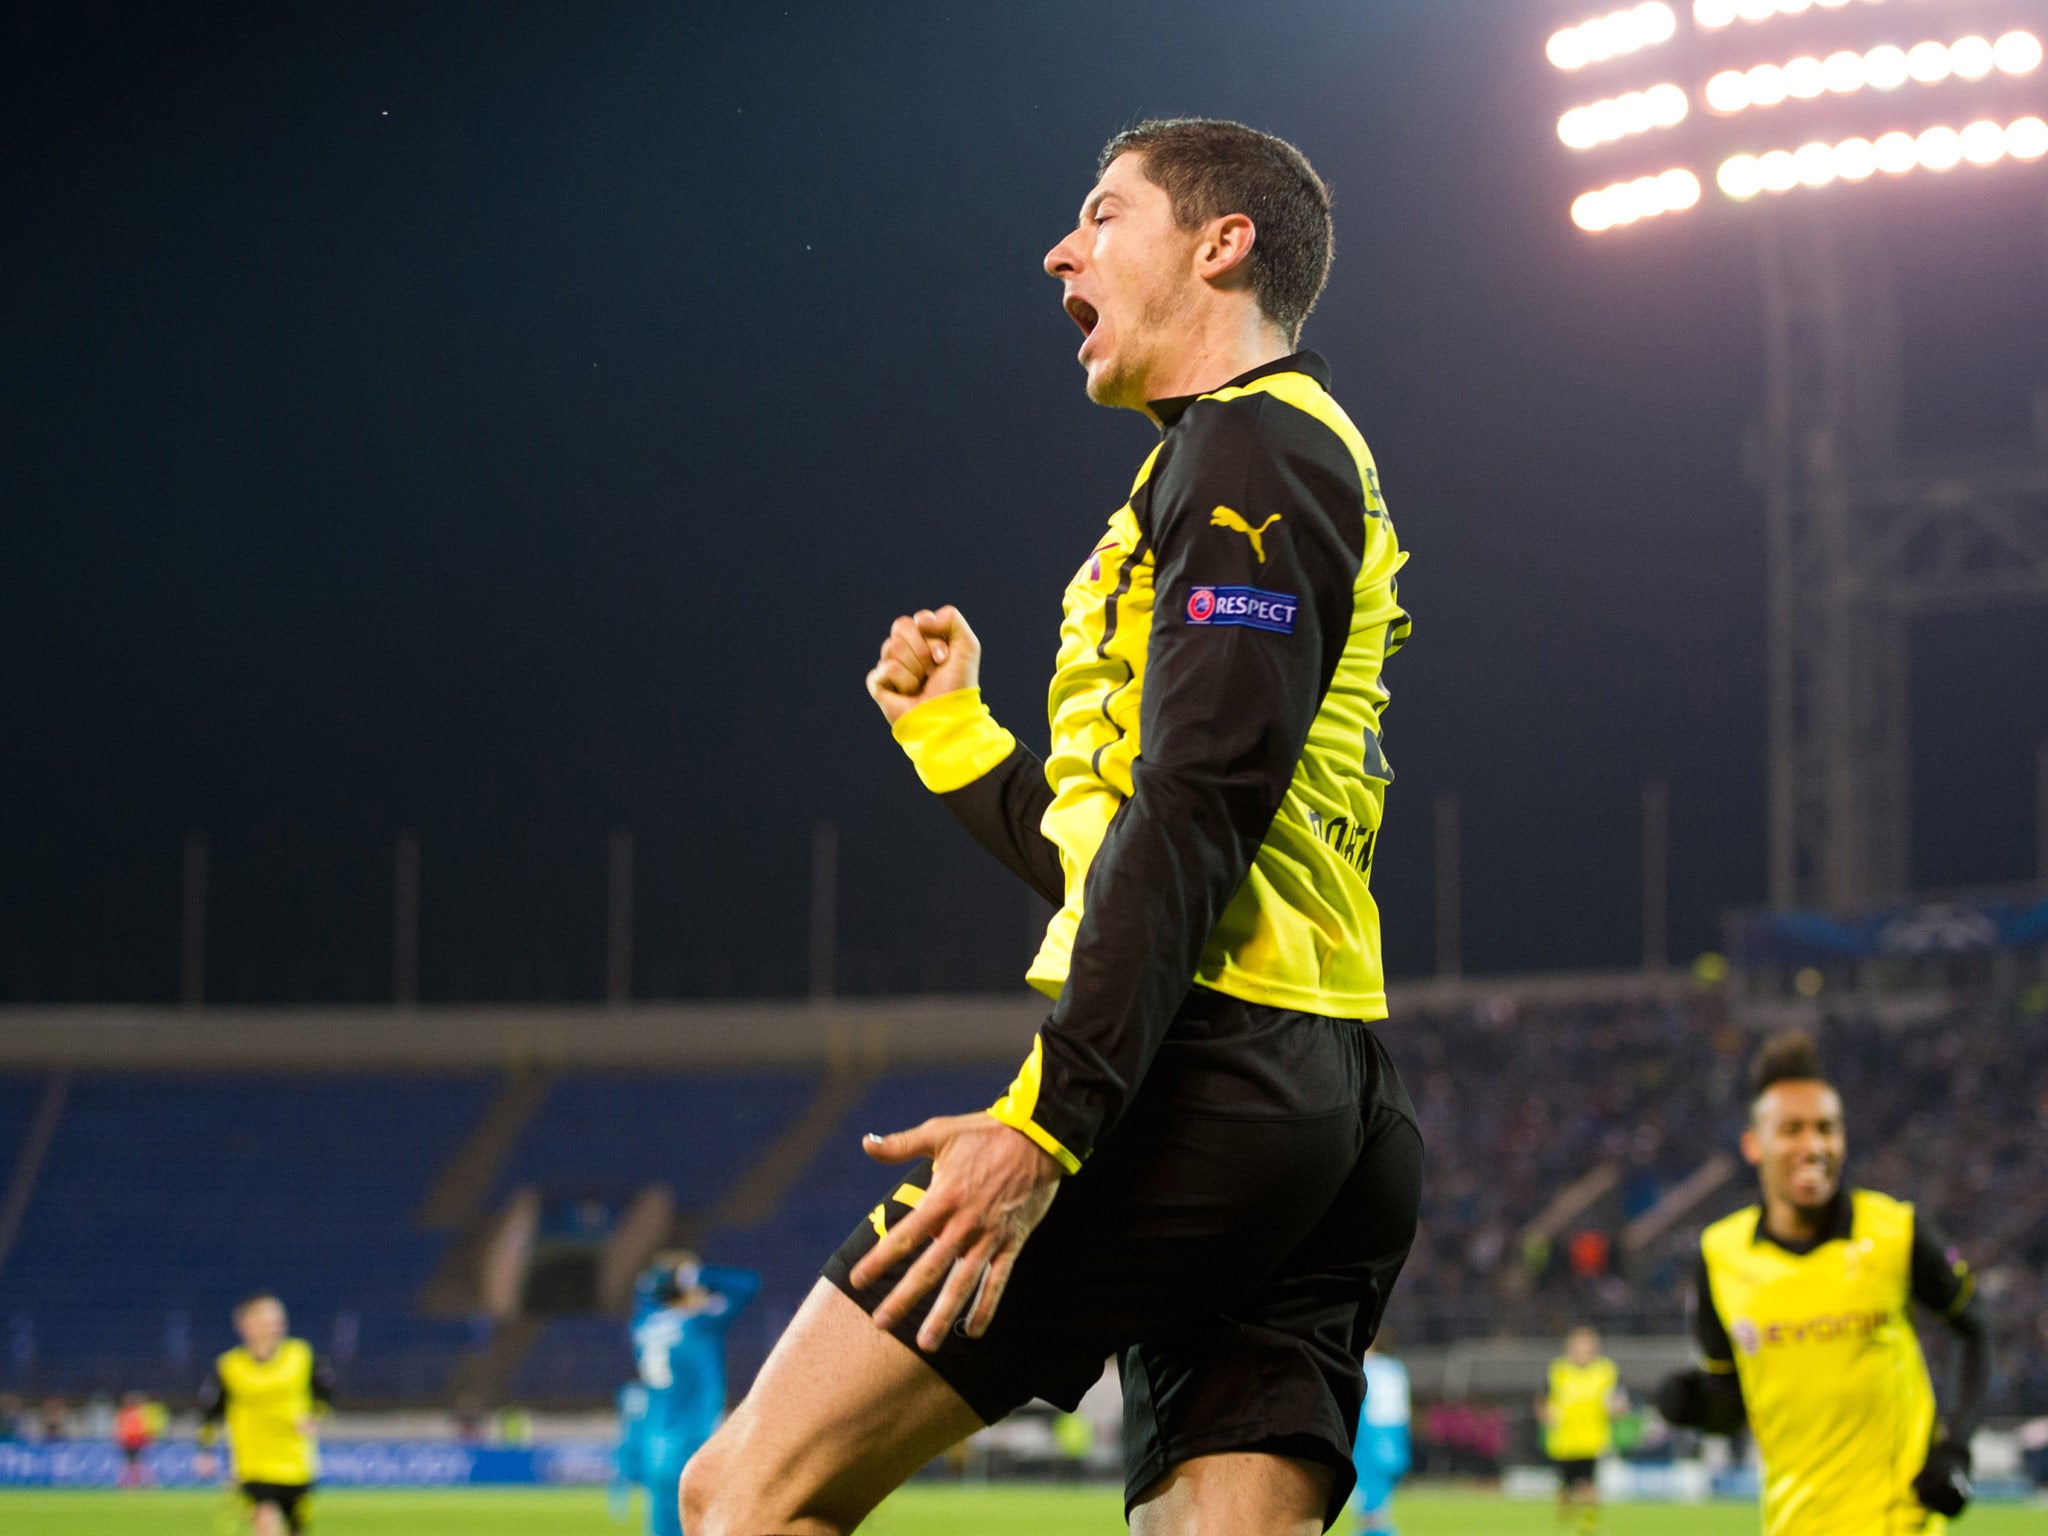 Borussia Dortmund's Robert Lewandowski celebrates after scoring a goal against Zenit St Petersburg during their Champions League last 16, first-leg match